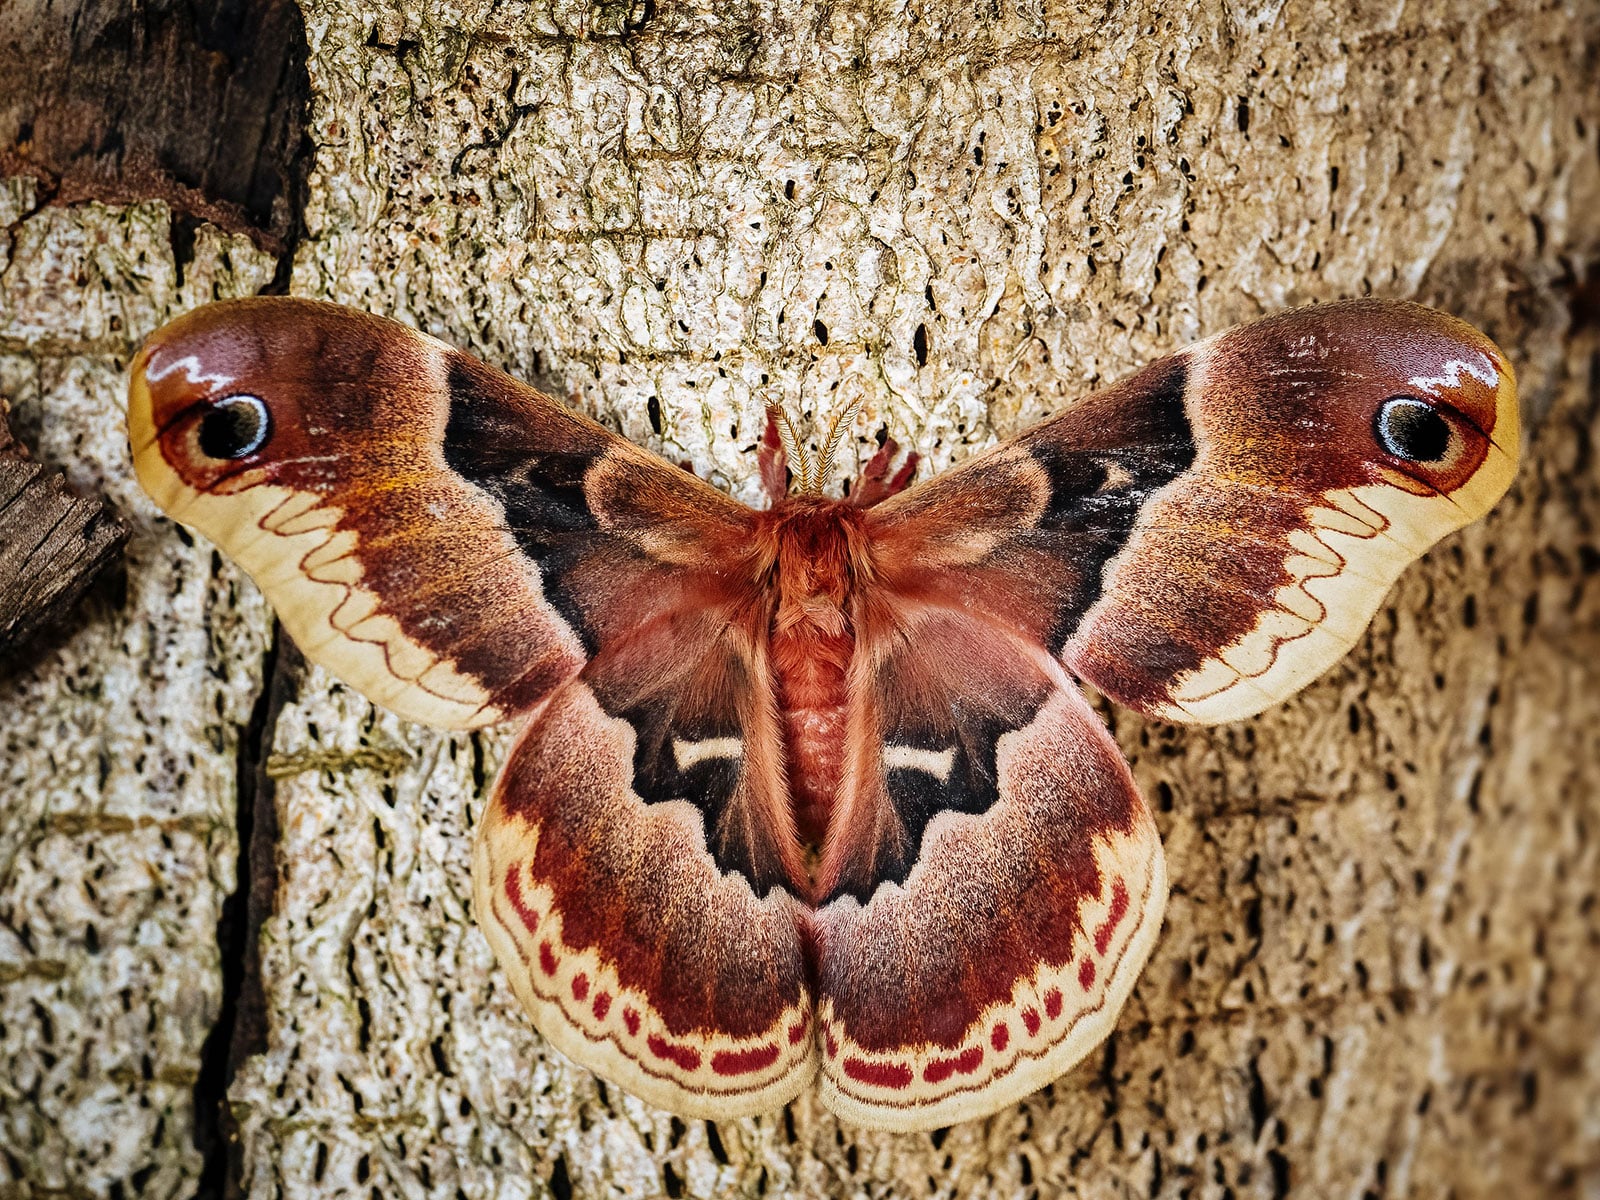 Promethea moth (spicebush silkmoth) resting on the side of a tree trunk